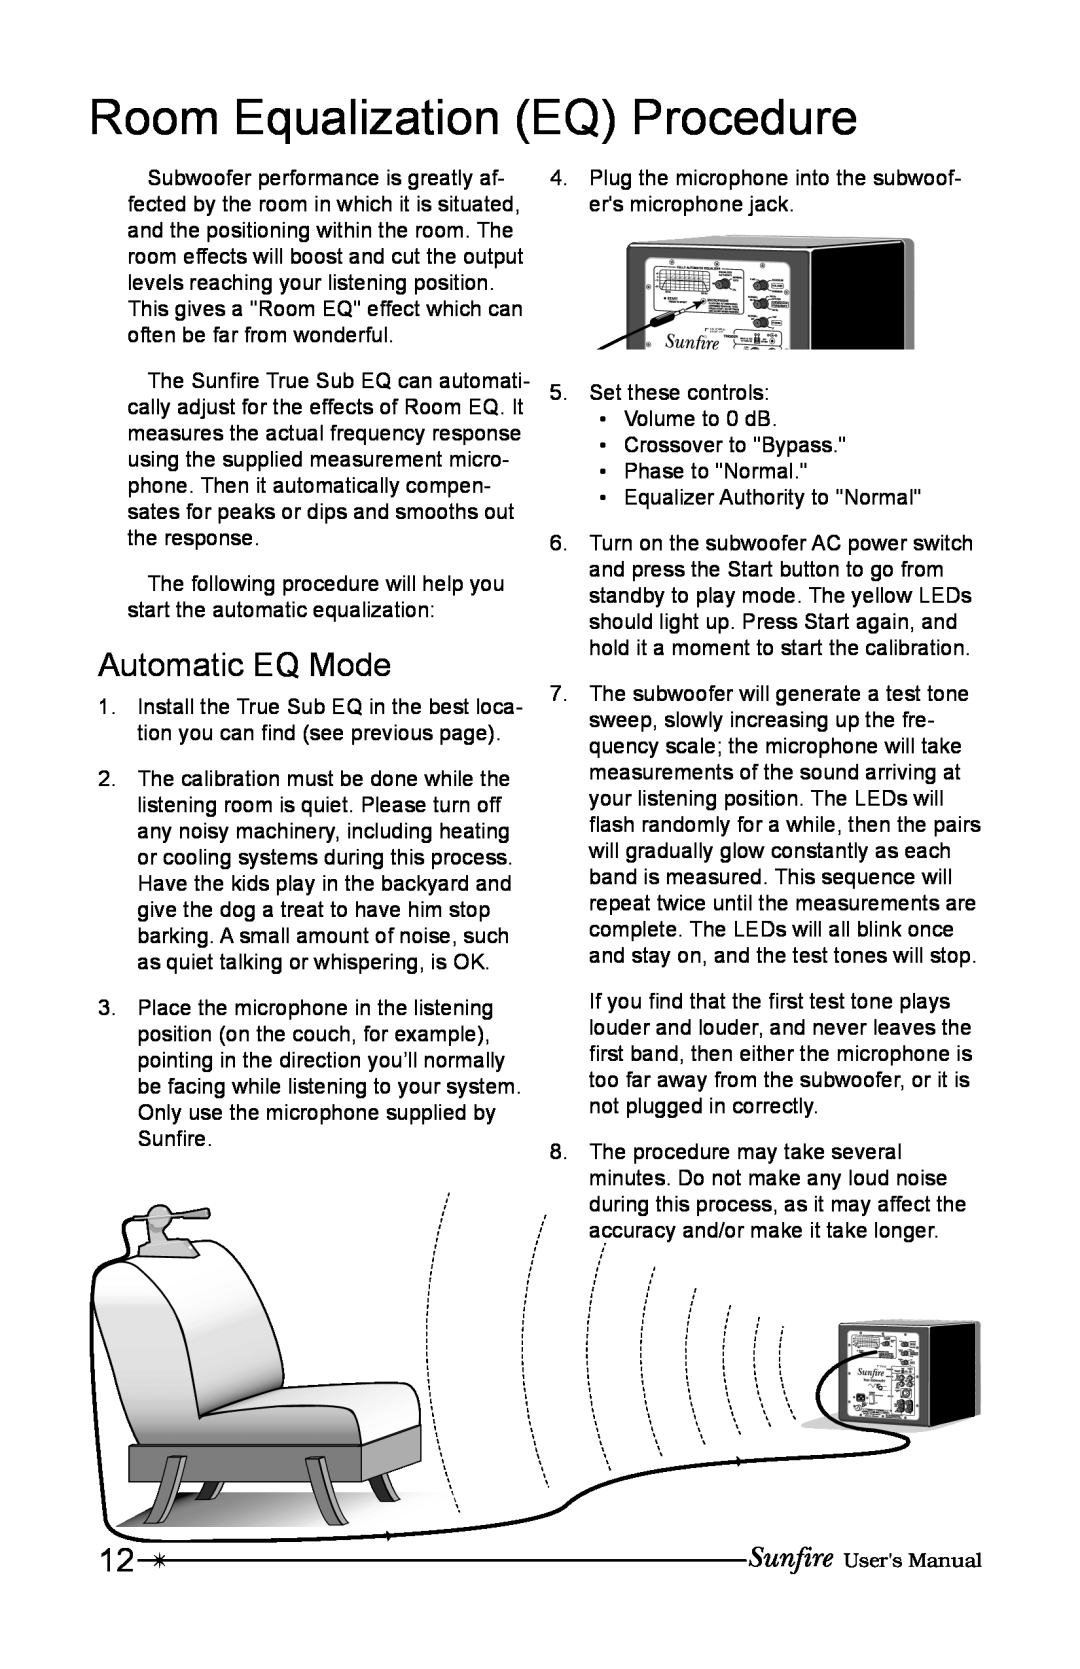 Sunfire 12 user manual Room Equalization EQ Procedure, Automatic EQ Mode 